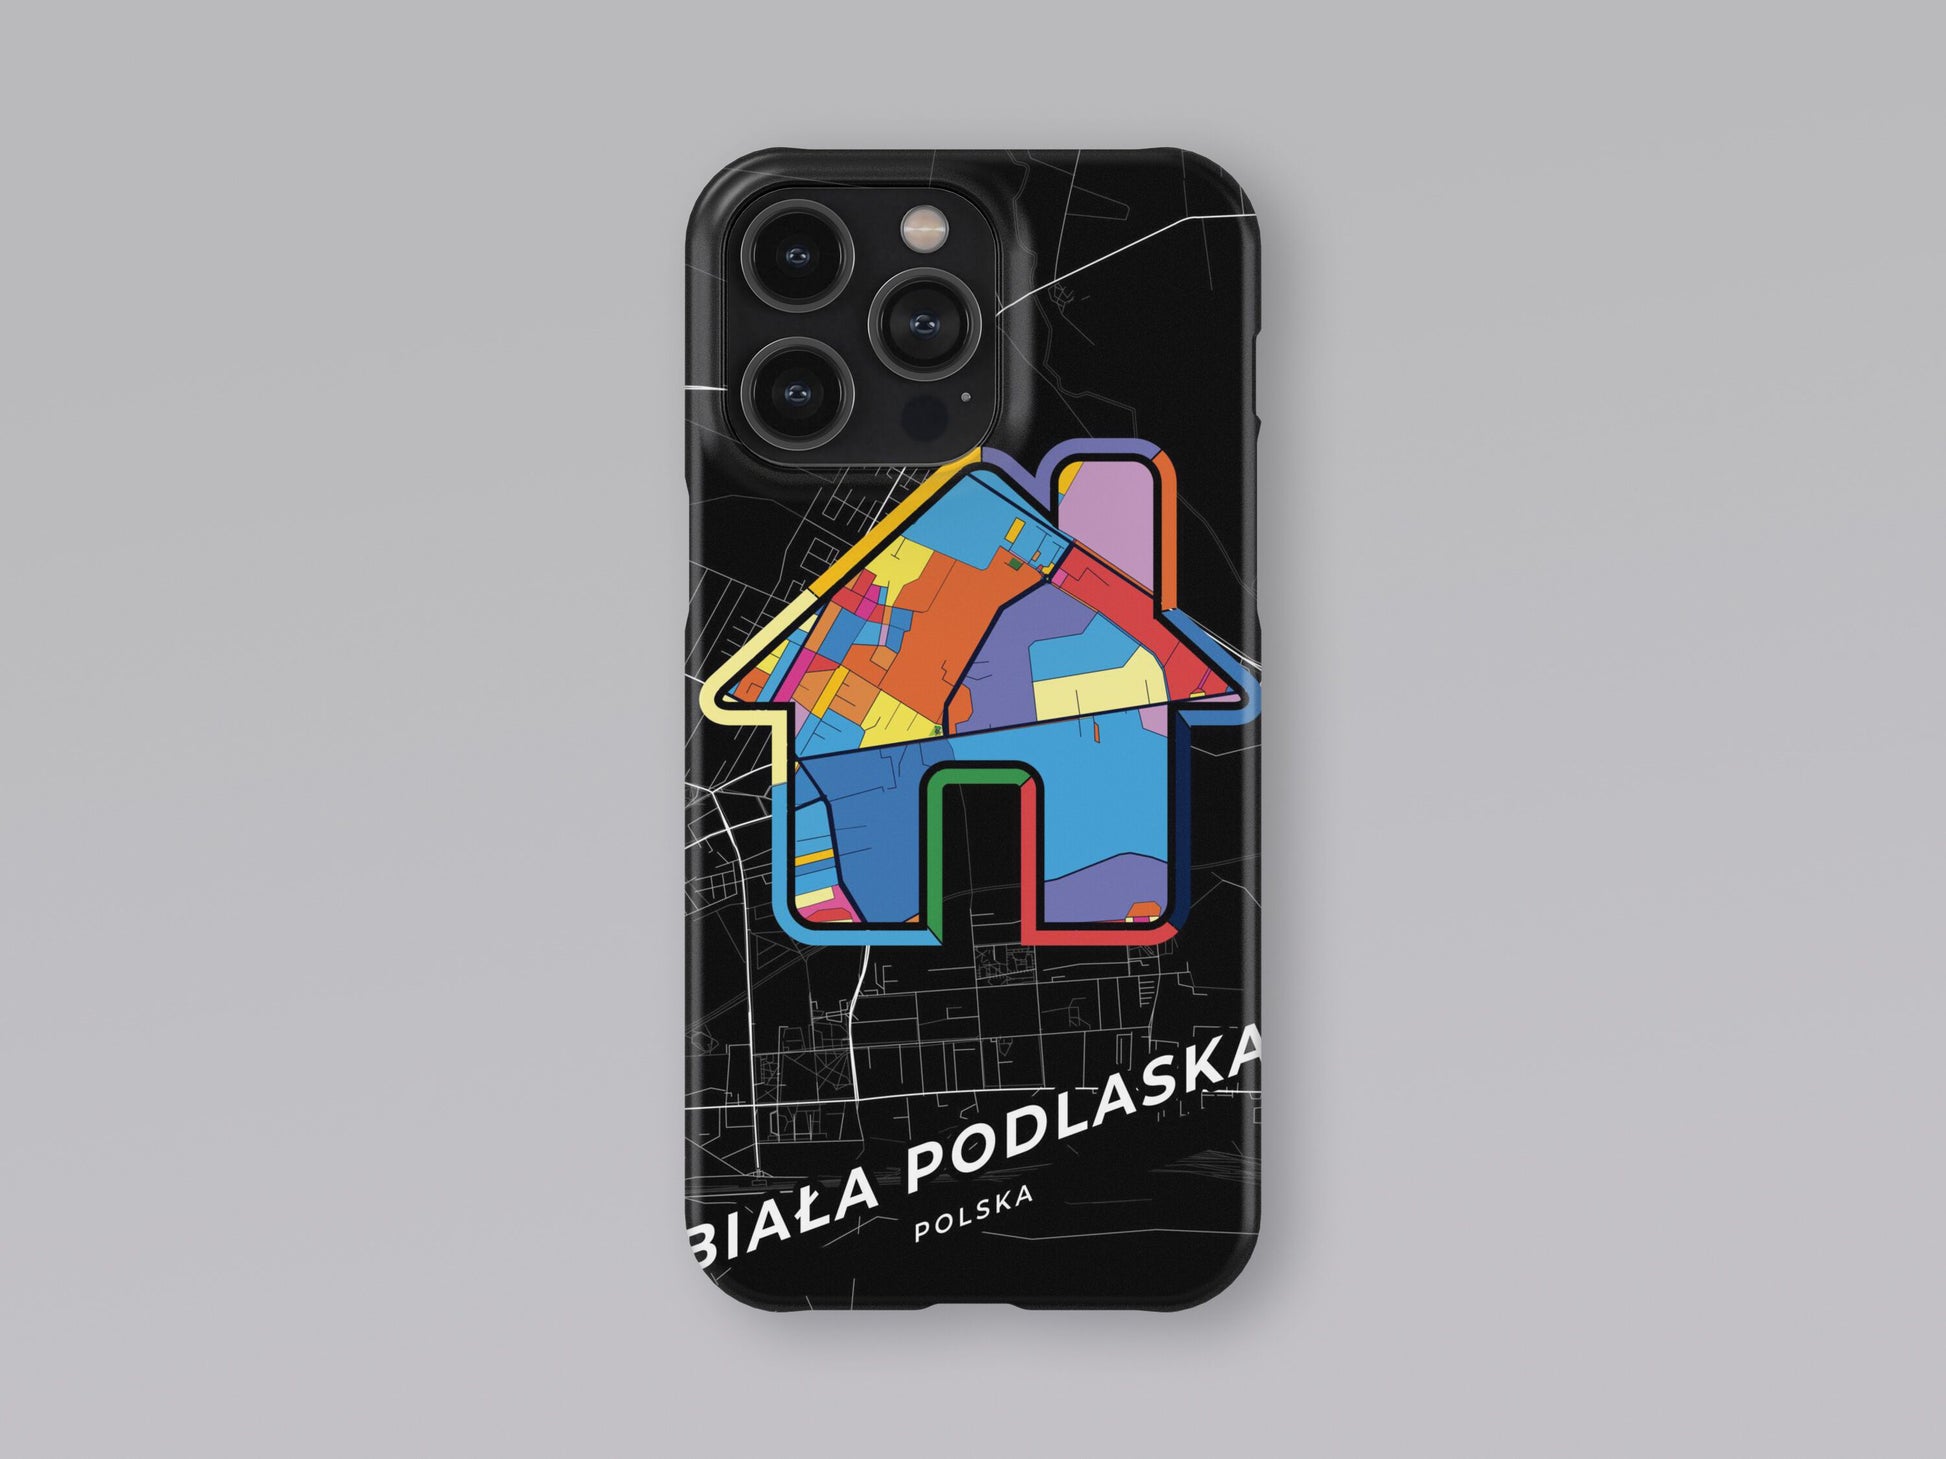 Biała Podlaska Poland slim phone case with colorful icon. Birthday, wedding or housewarming gift. Couple match cases. 3